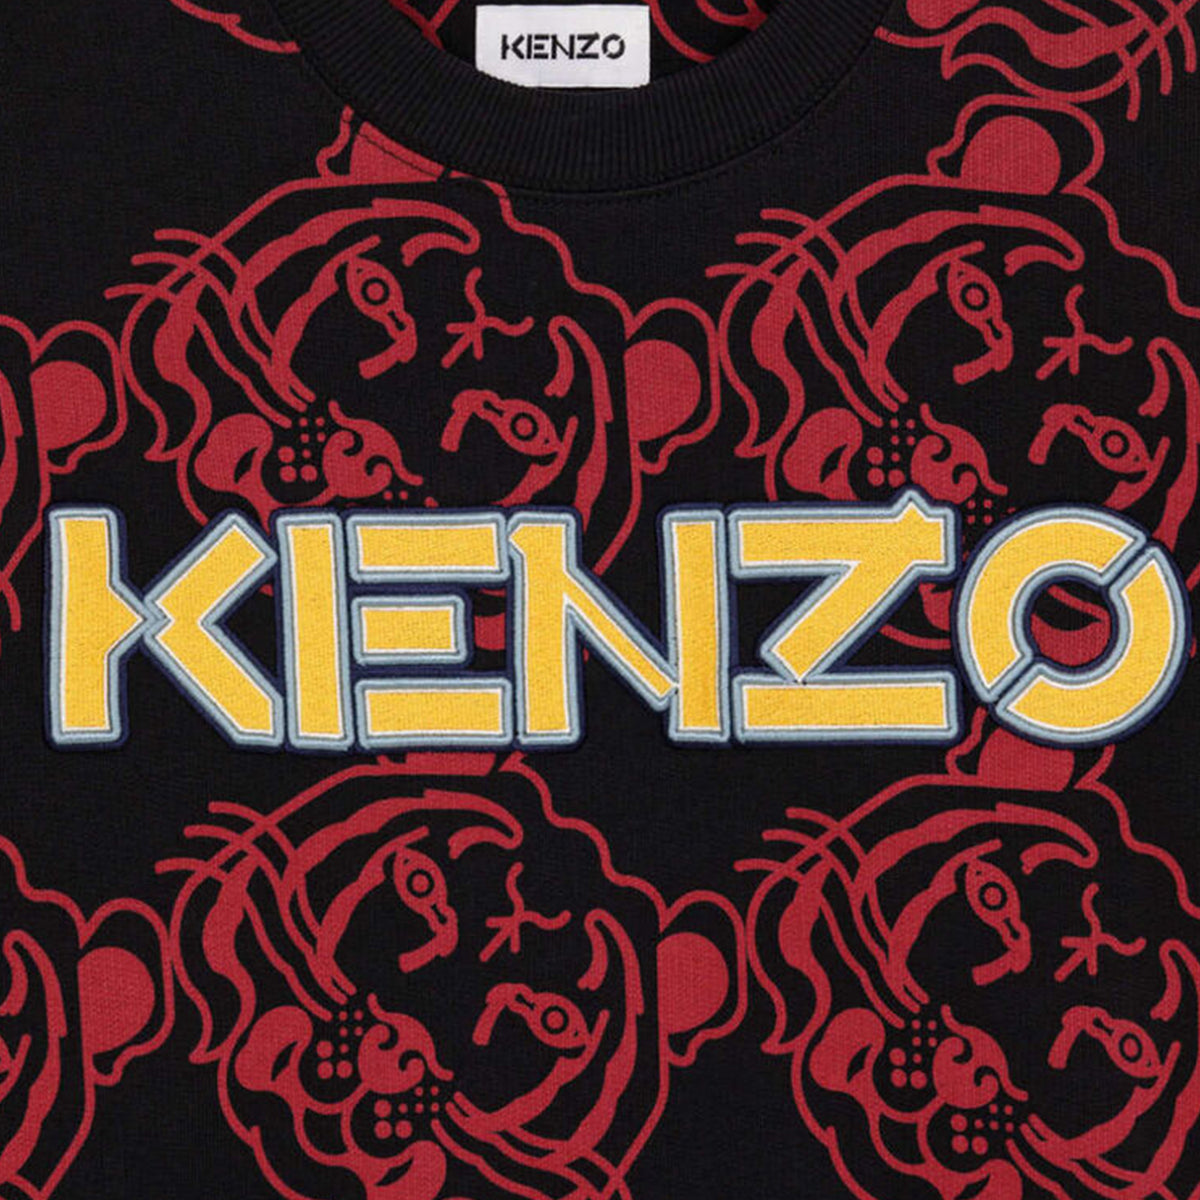 Kenzo Men's 'Year of The Tiger' Logo Sweatshirt